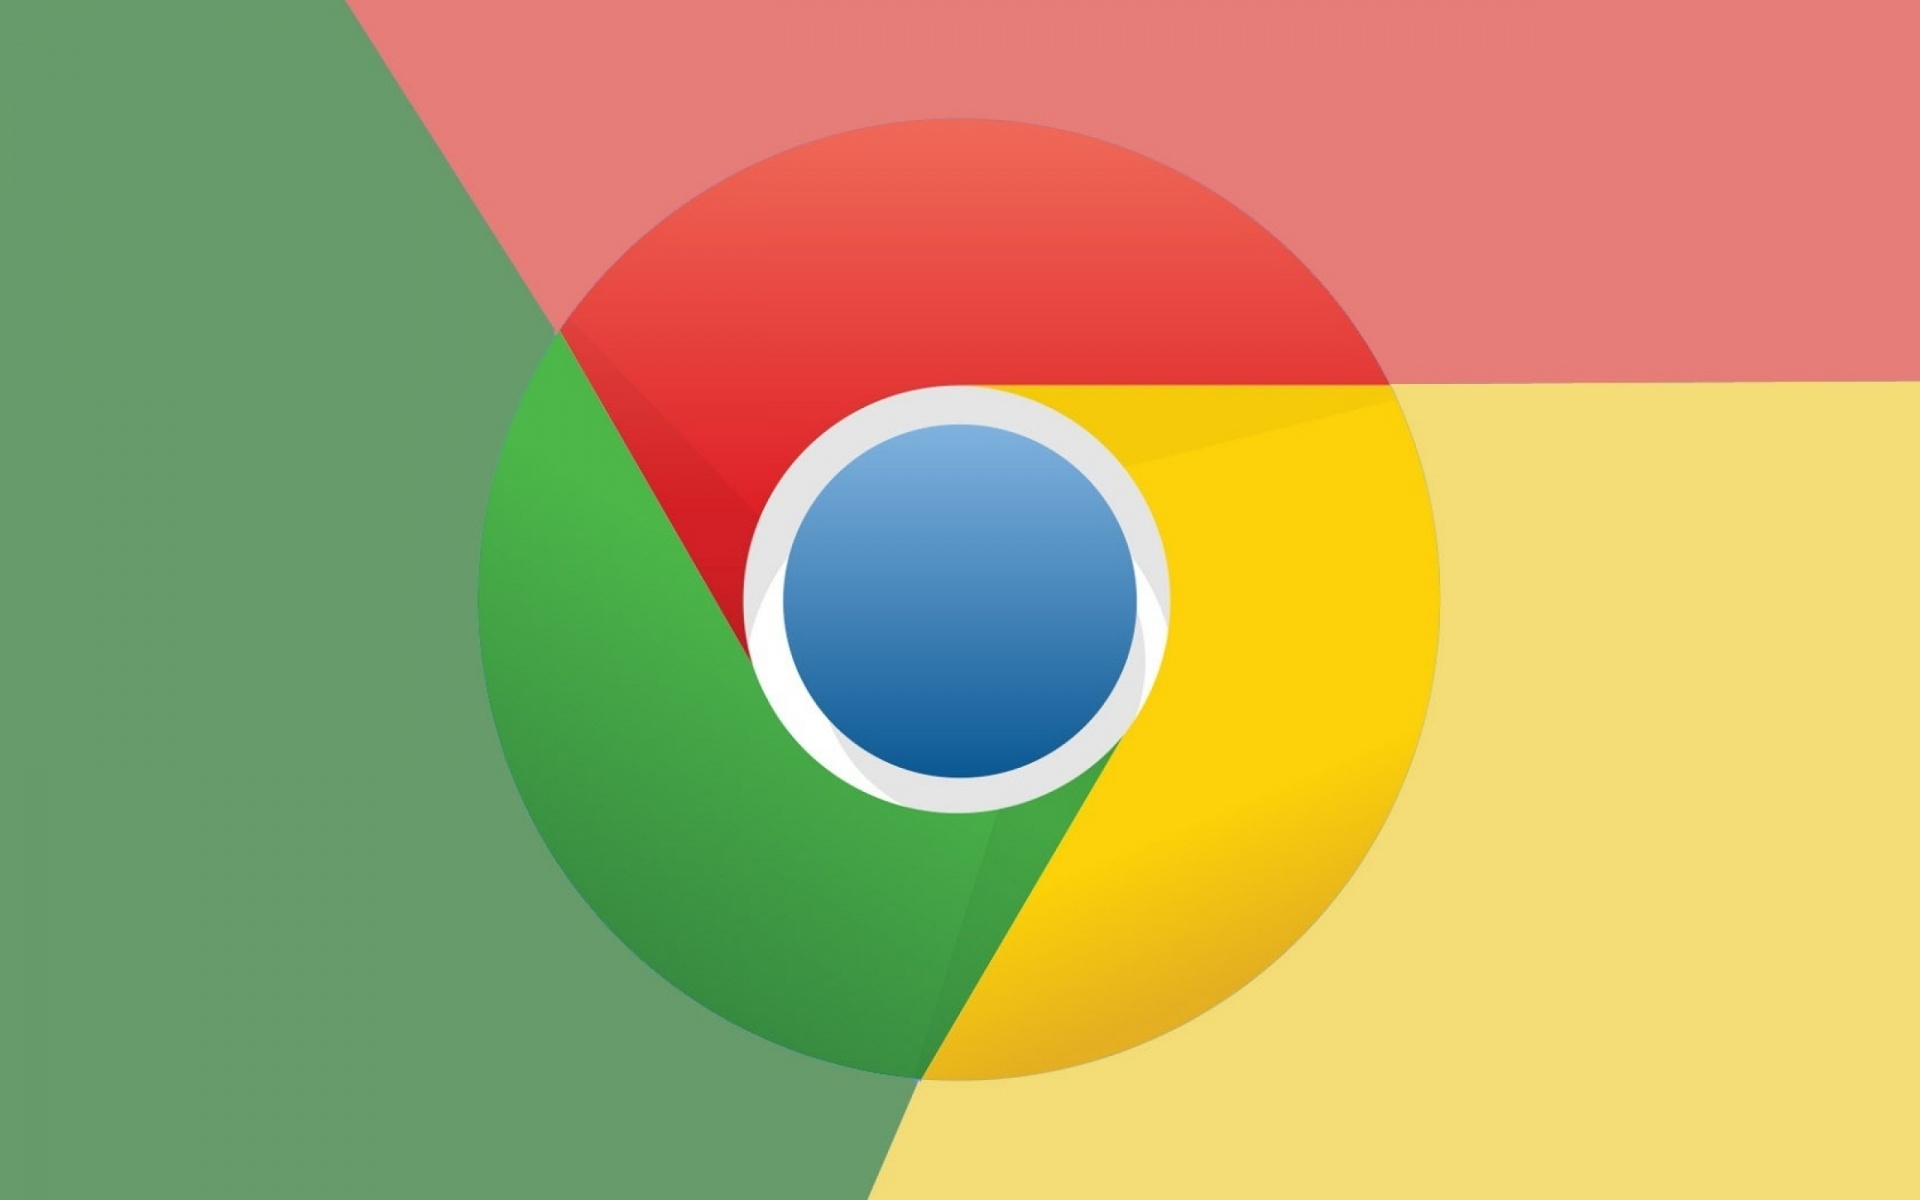 download google chrome for windows xp 32 bit offline installer